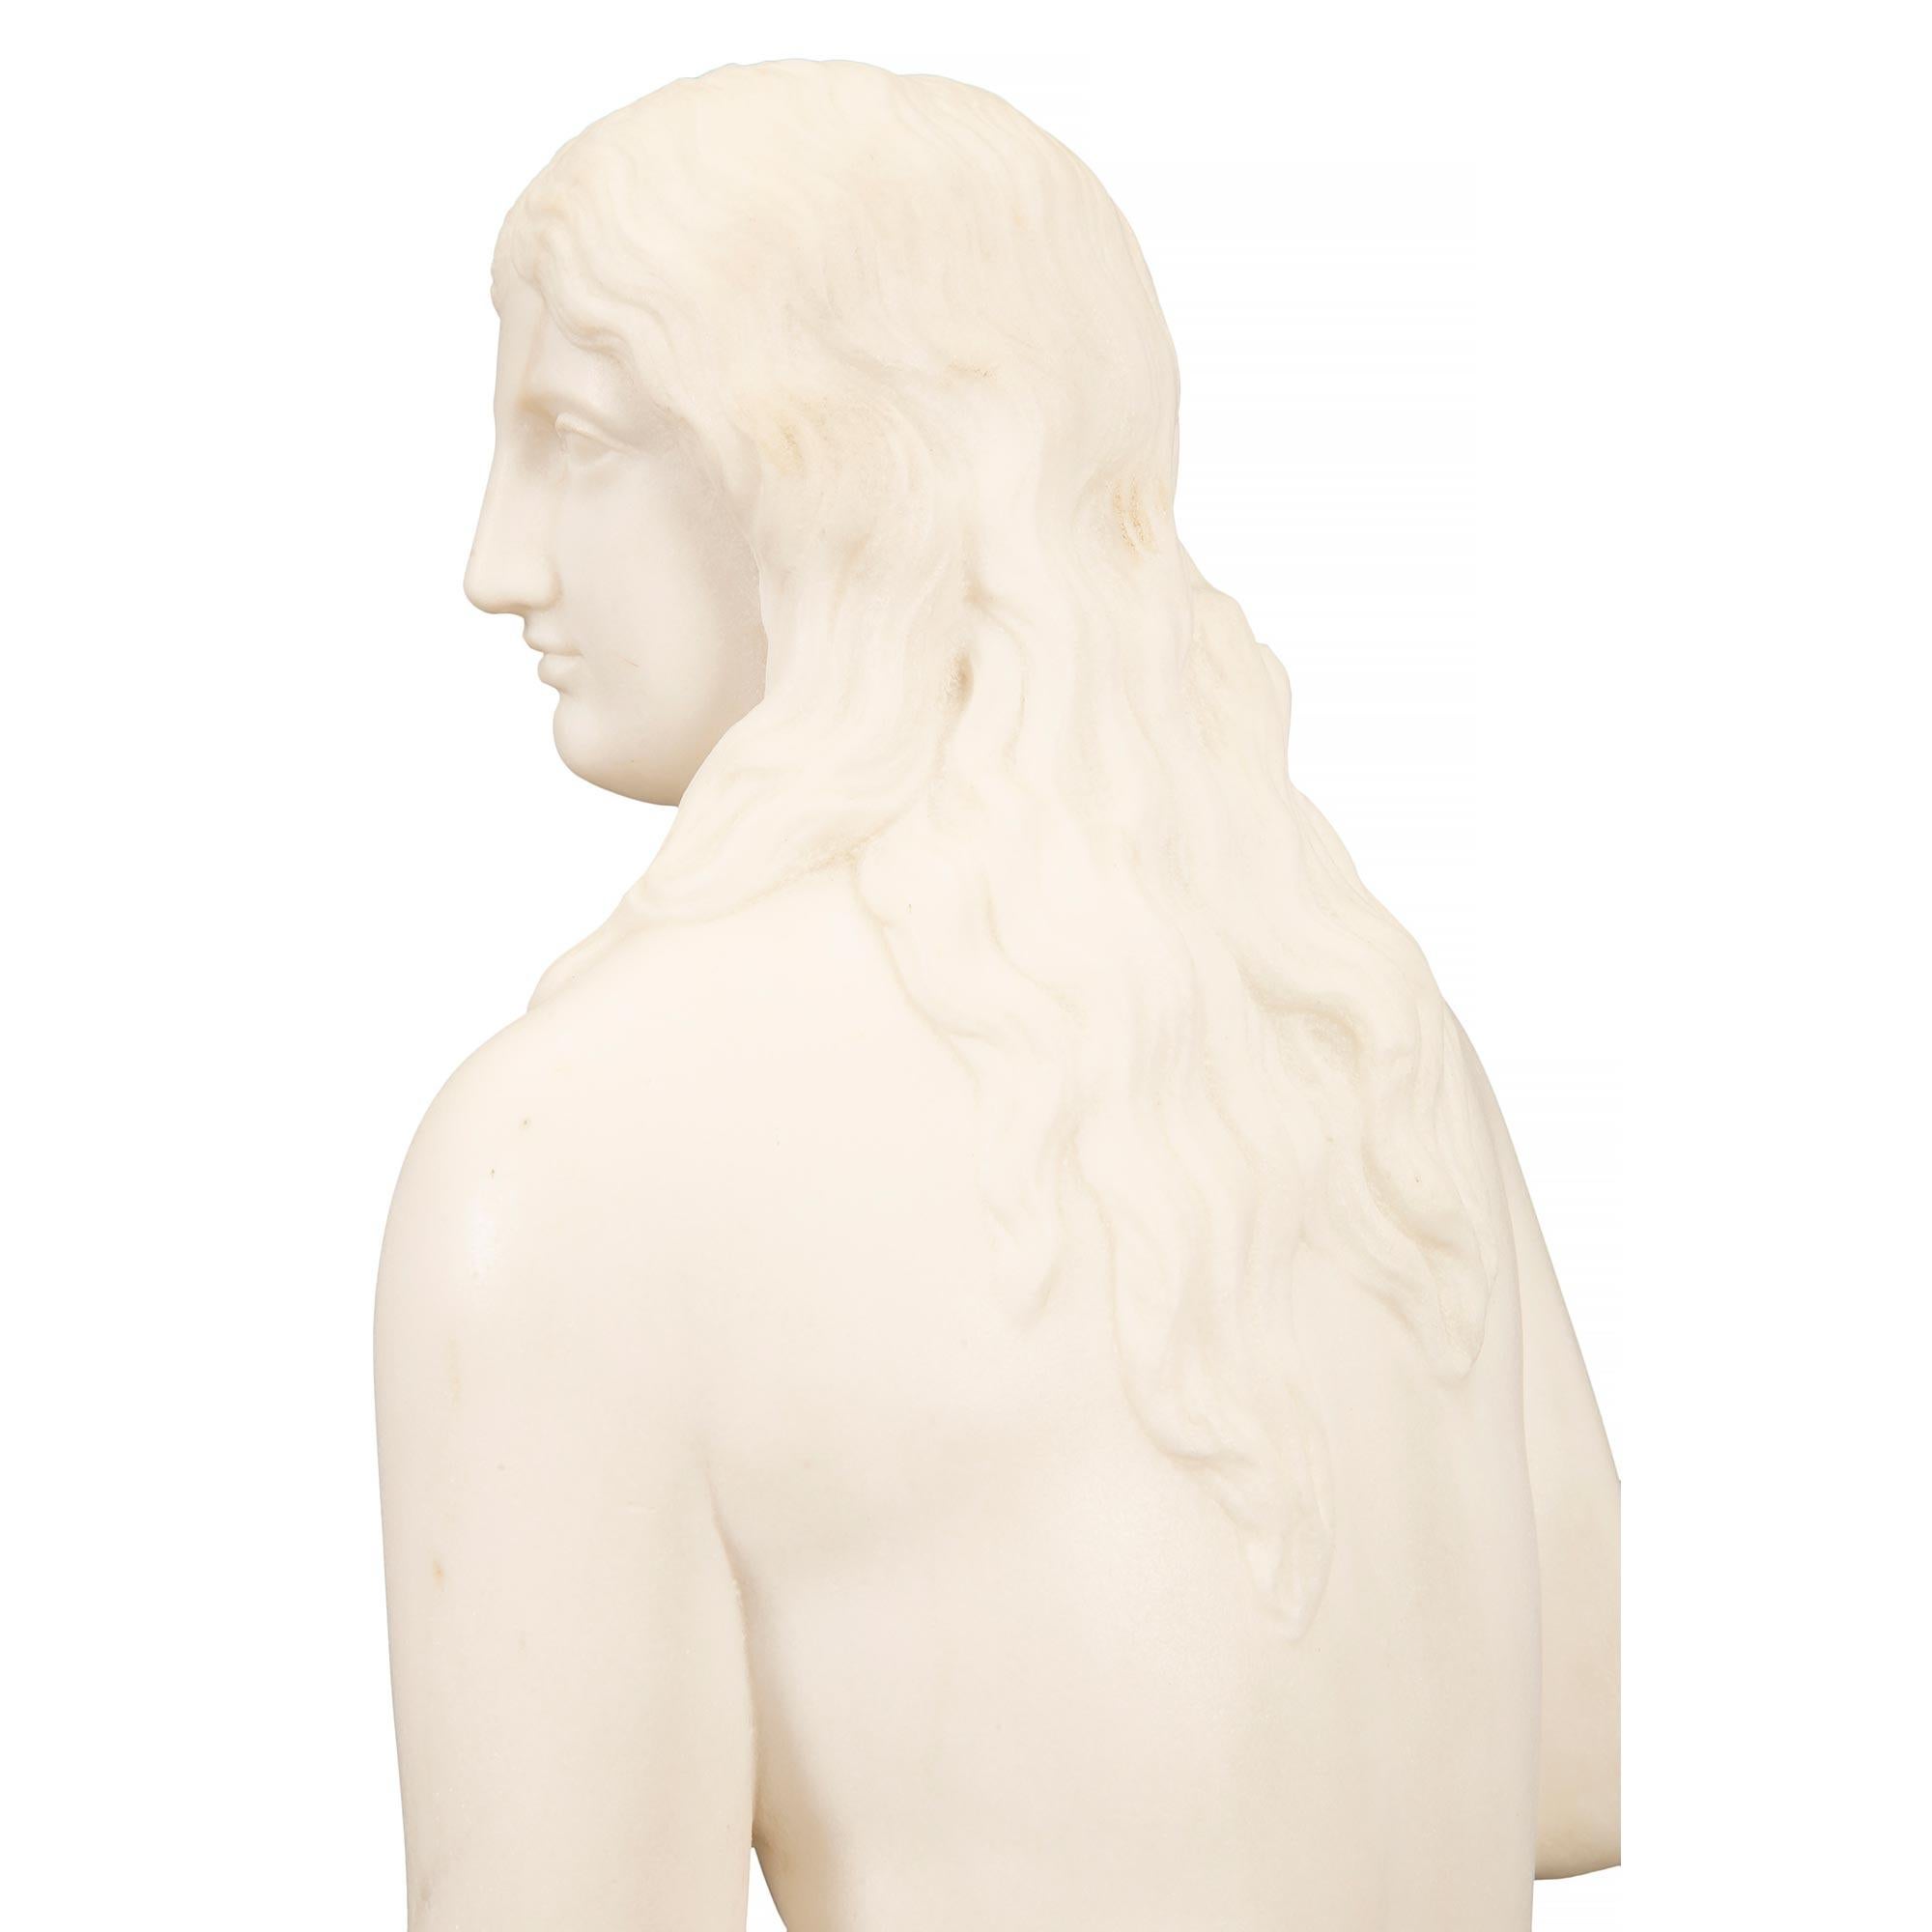 Italian 19th Century Neoclassical St. Marble Statue Of “La Baigneuse” For Sale 1